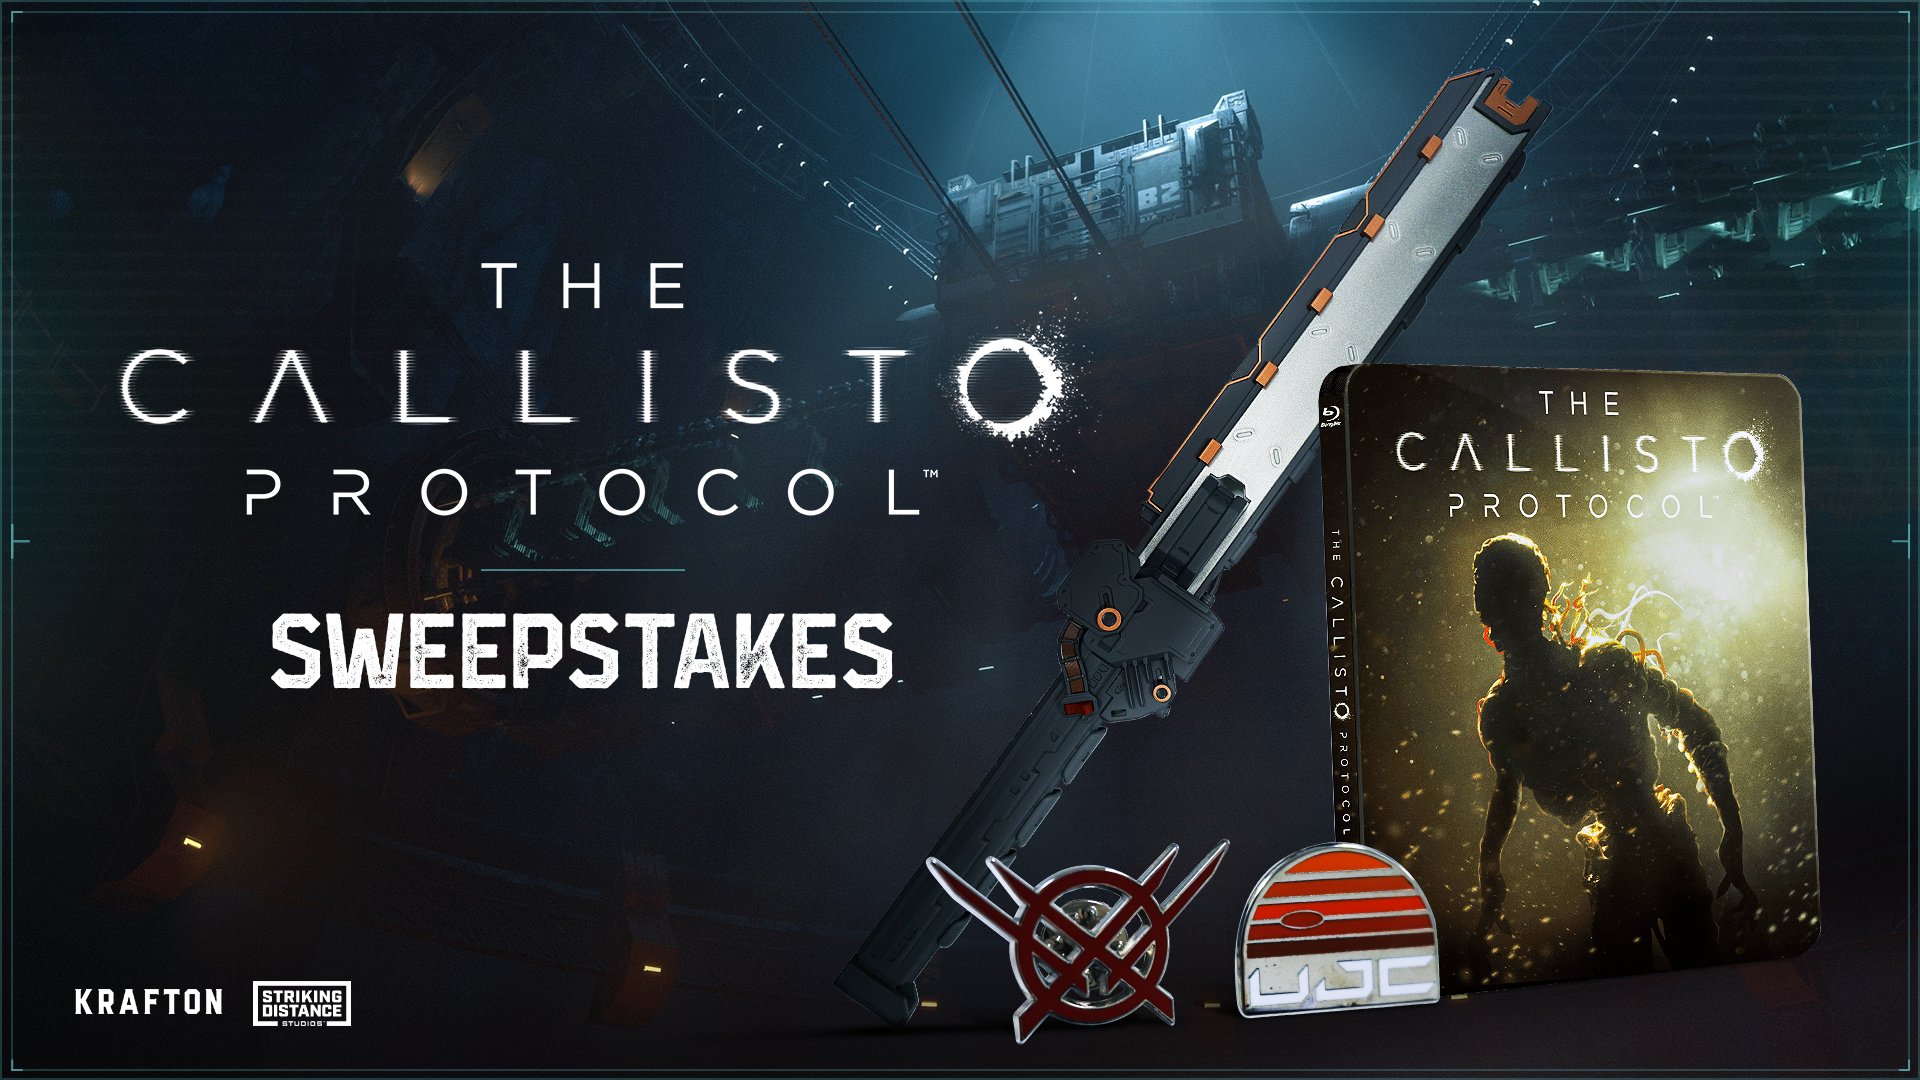 The Callisto Protocol™ - Final Transmission on Steam